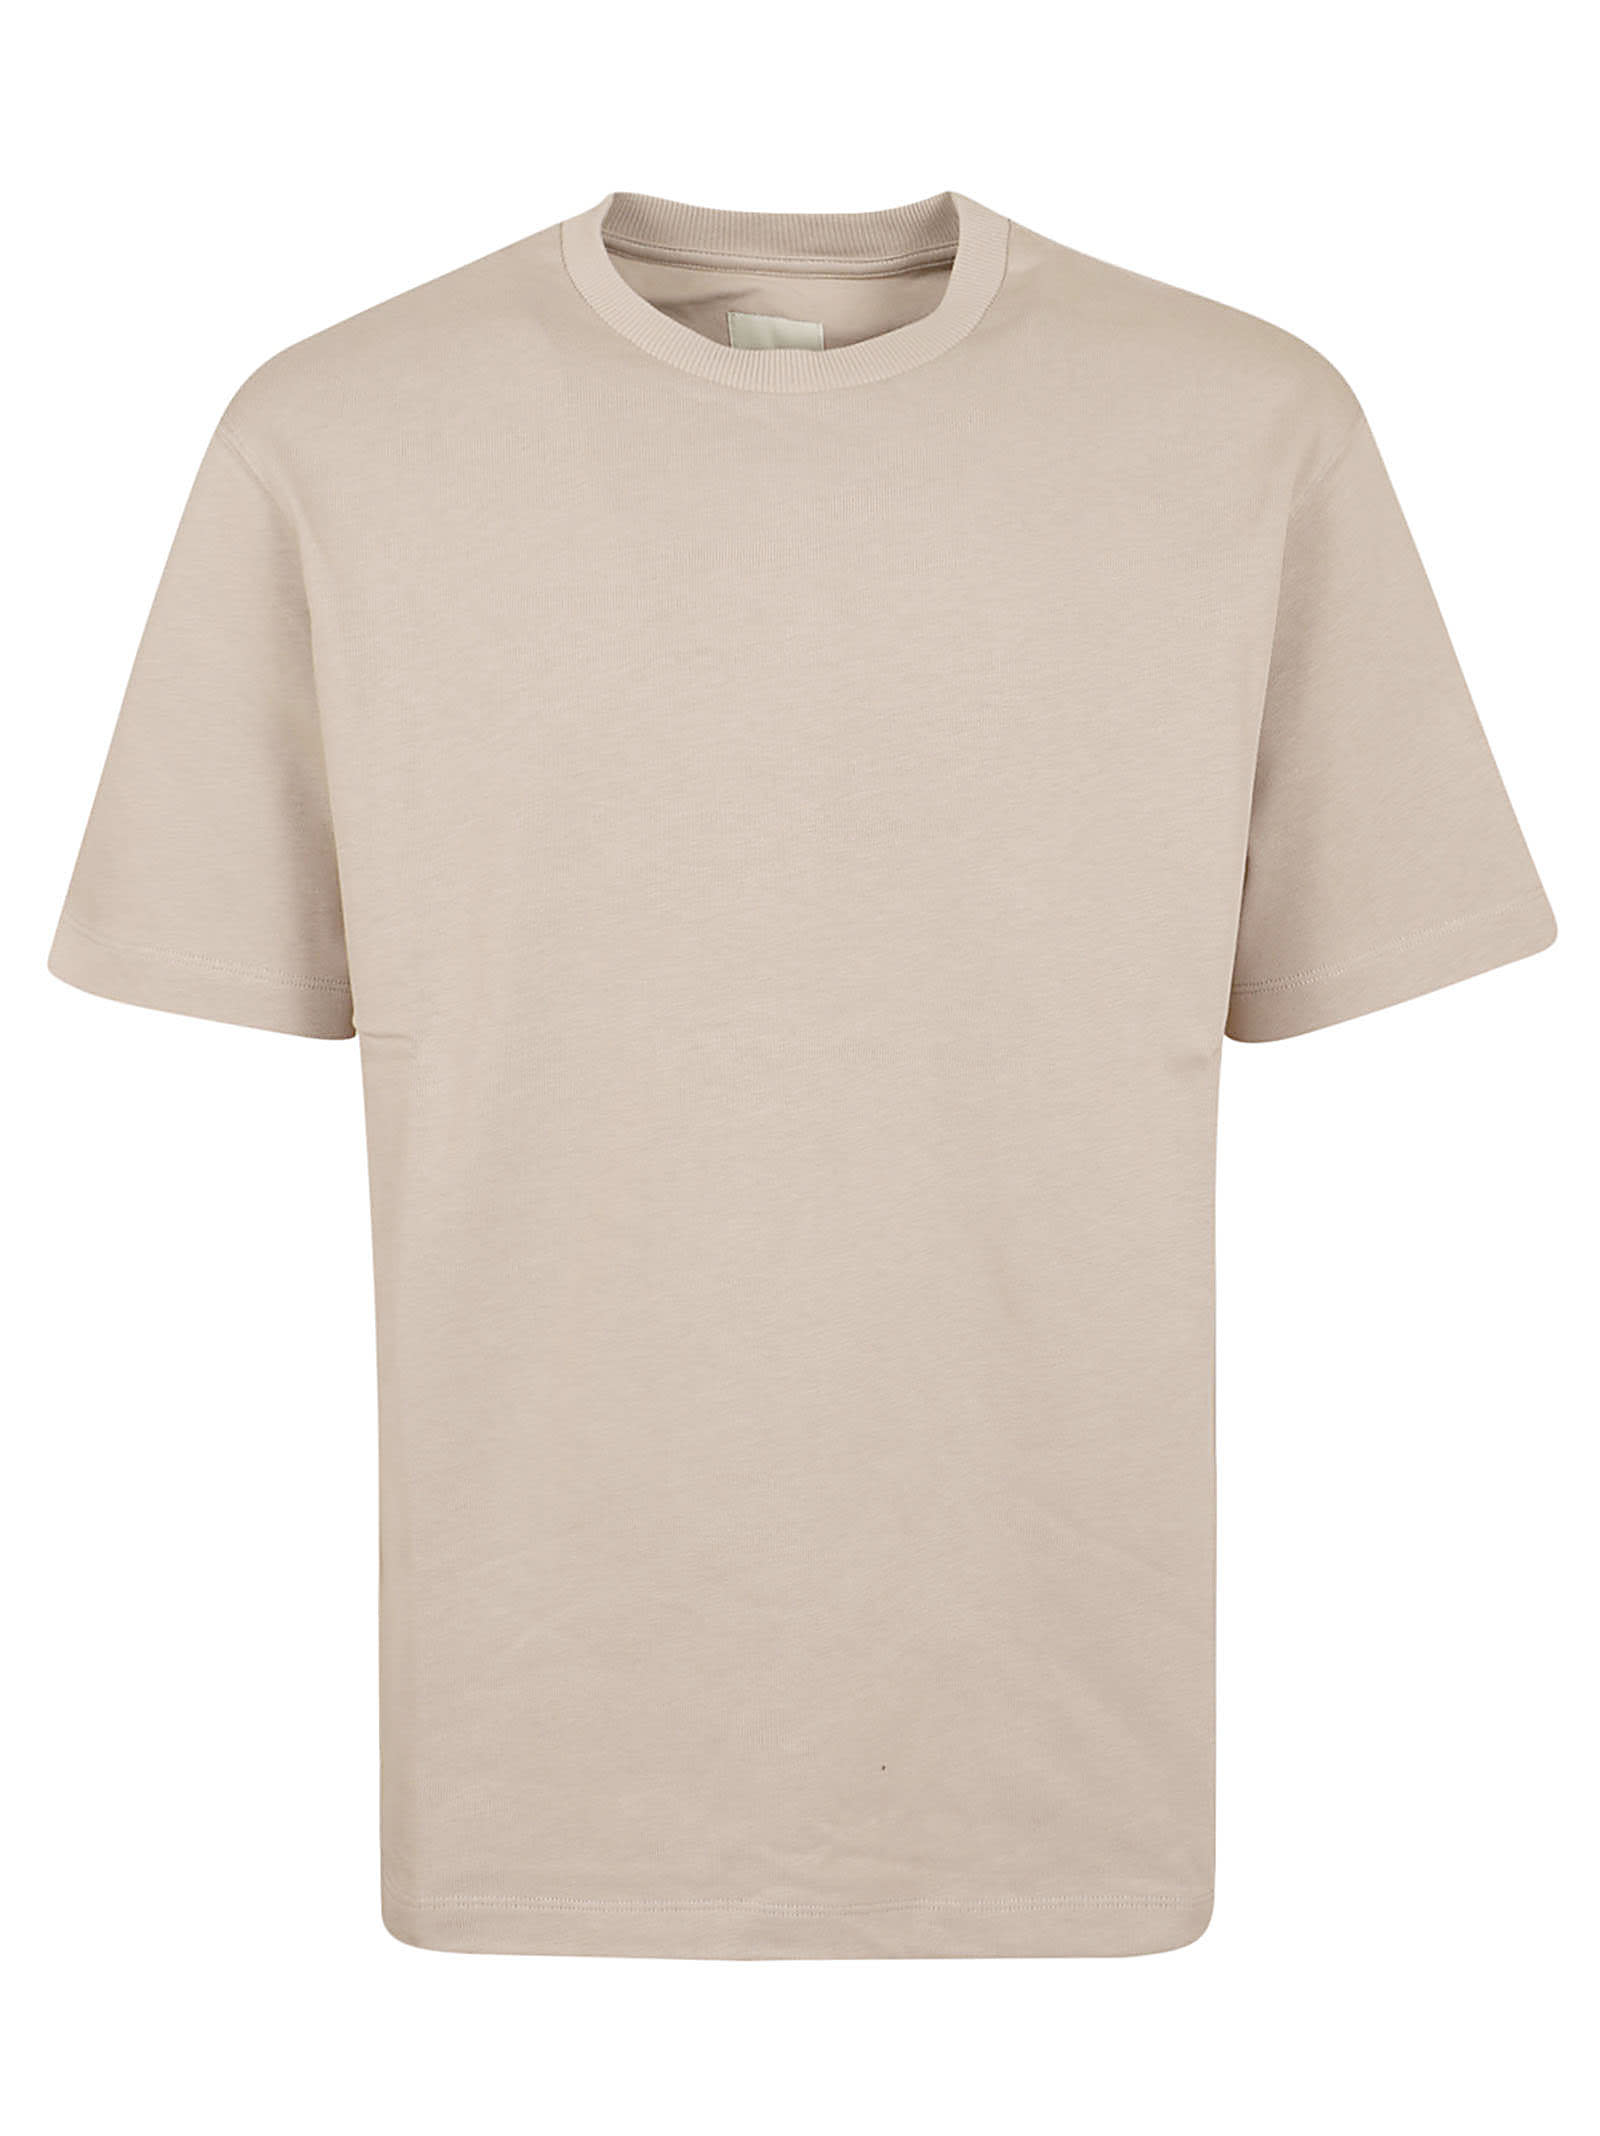 Emporio Armani T-shirt In Brown